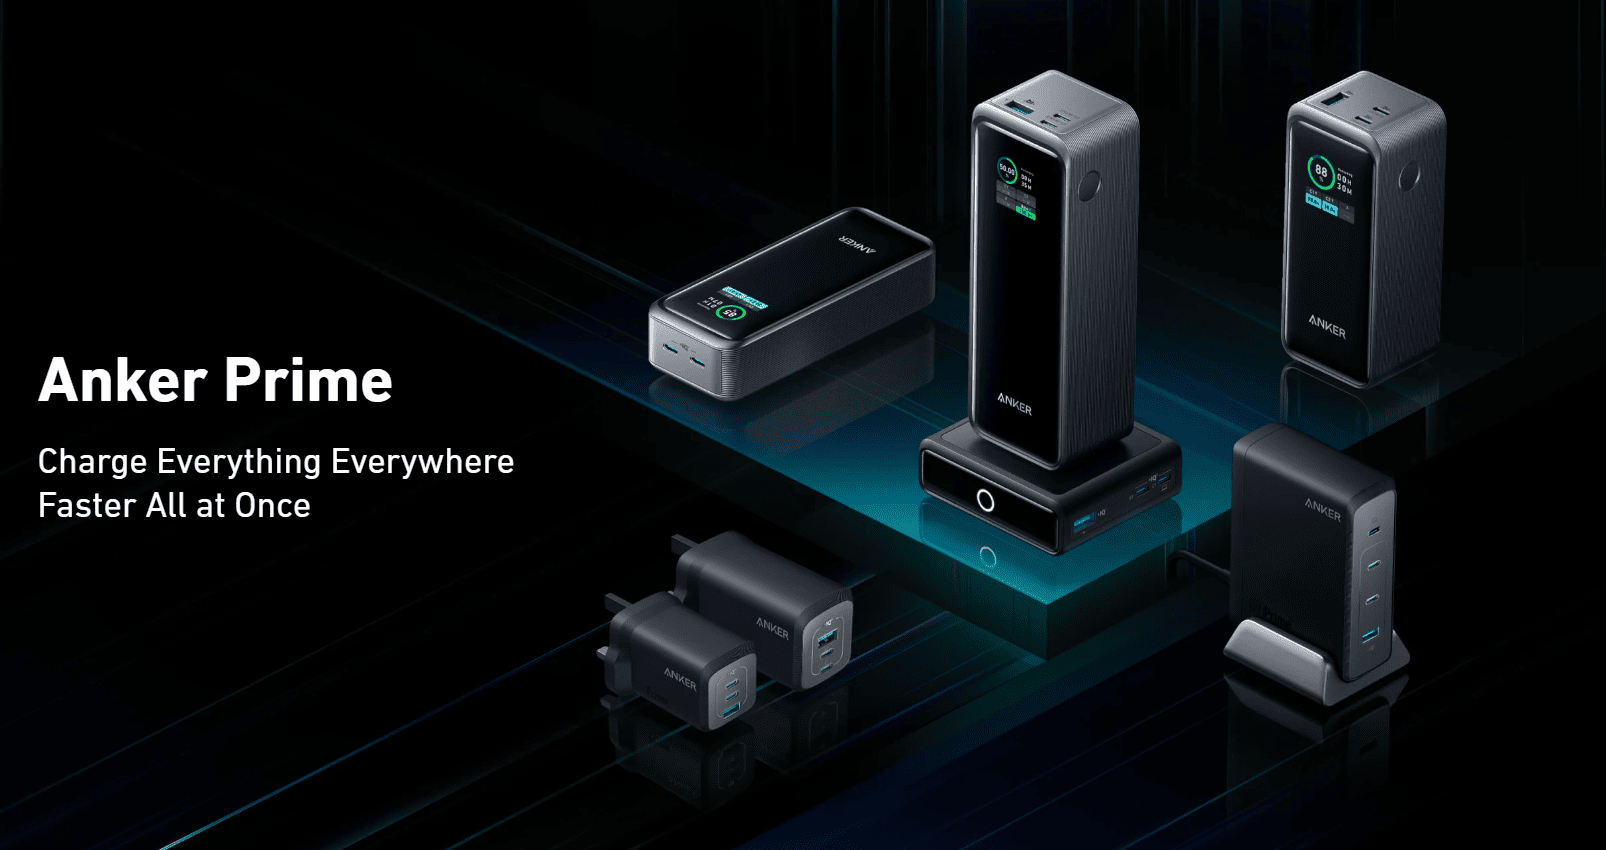 Anker Prime Series Launched included 240-watt GaN Desktop Charger & Anker Prime 200-watt Power Bank